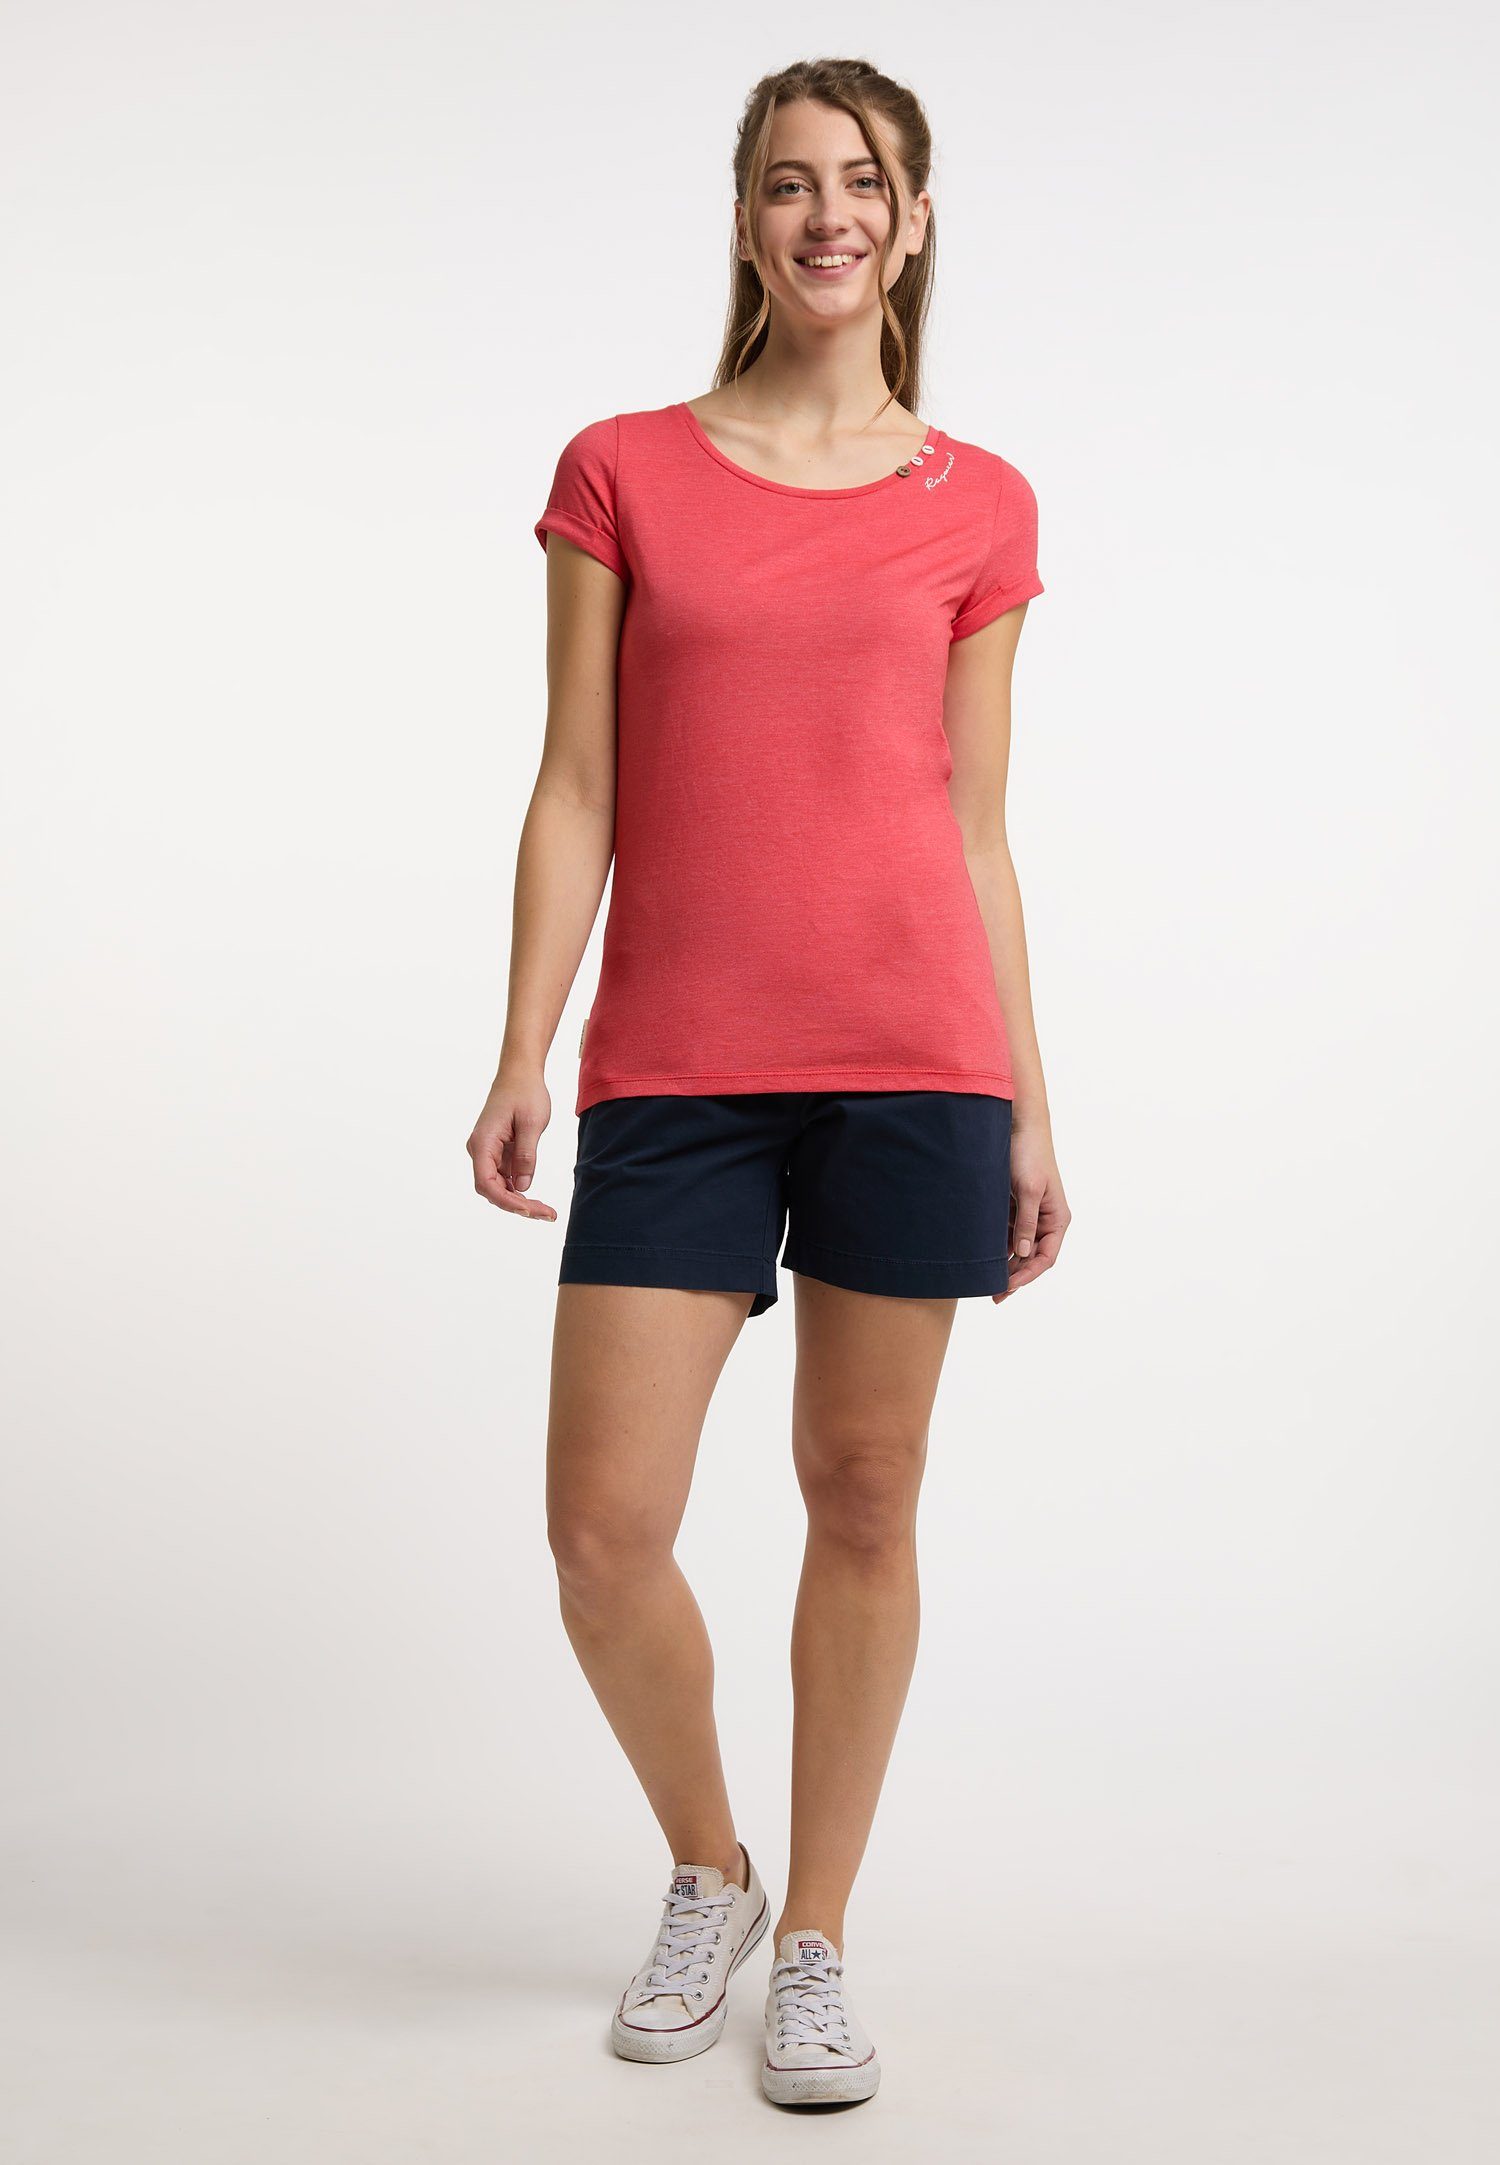 & Ragwear A T-Shirt Nachhaltige RED FLORAH Mode Vegane ORGANIC